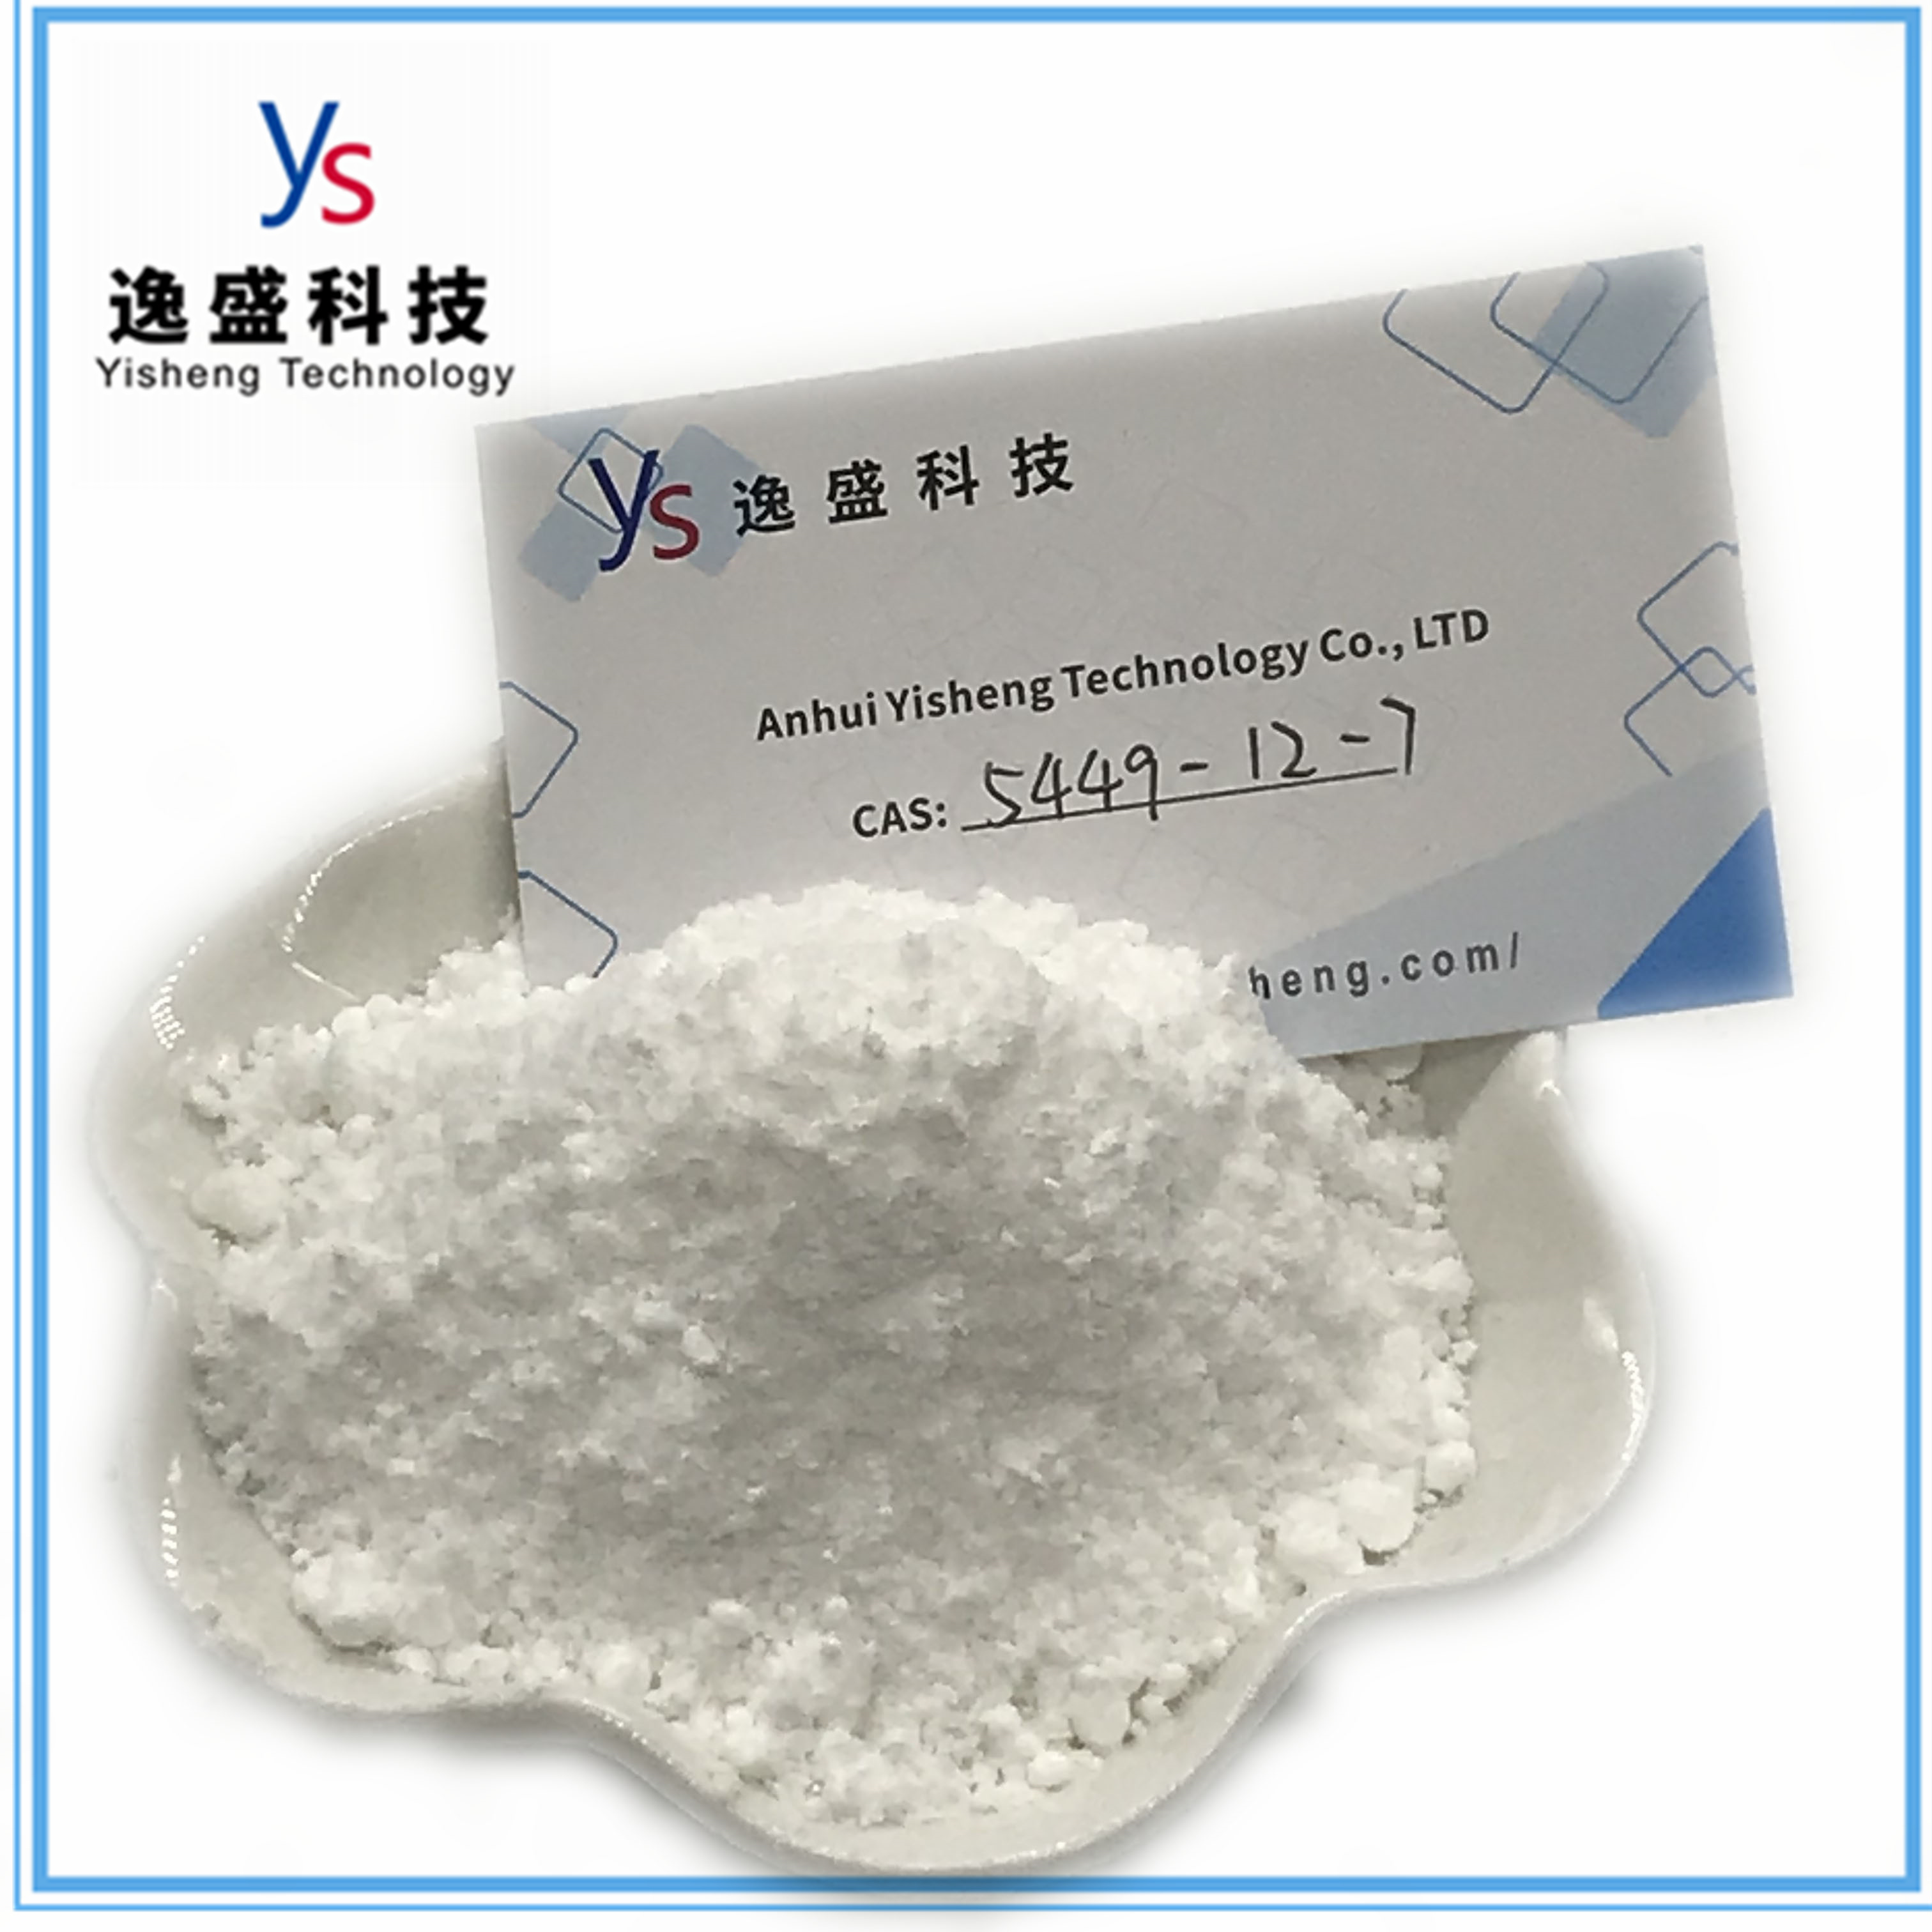 White Powder CAS 5449-12-7 With High Quality 